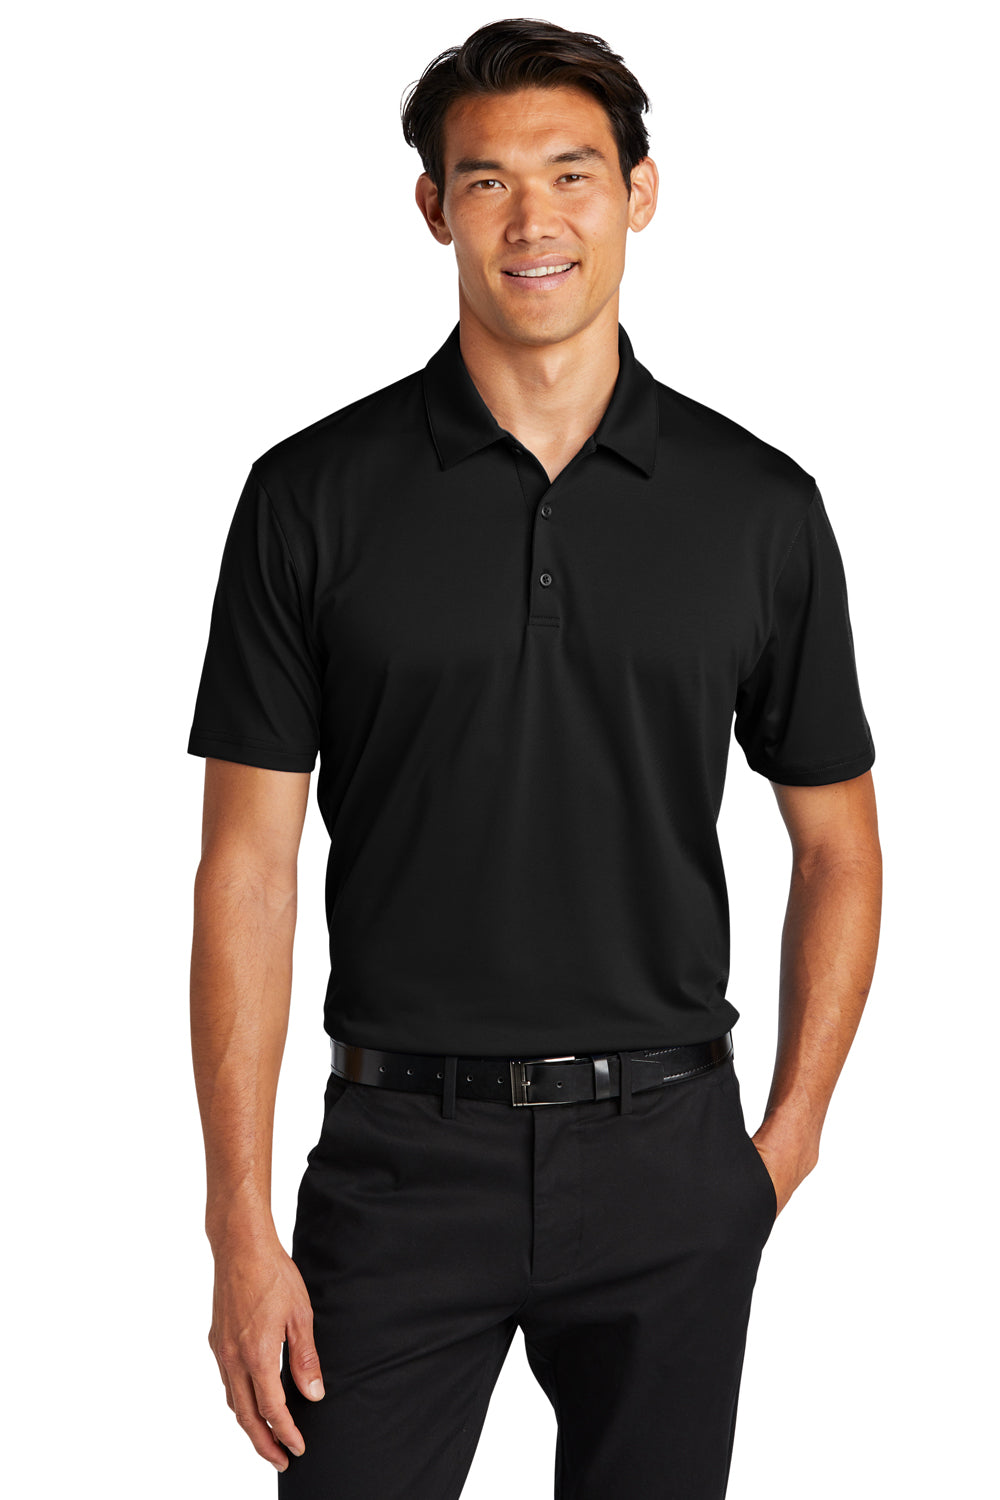 Port Authority K398 Staff Performance Short Sleeve Polo Shirt Black Front